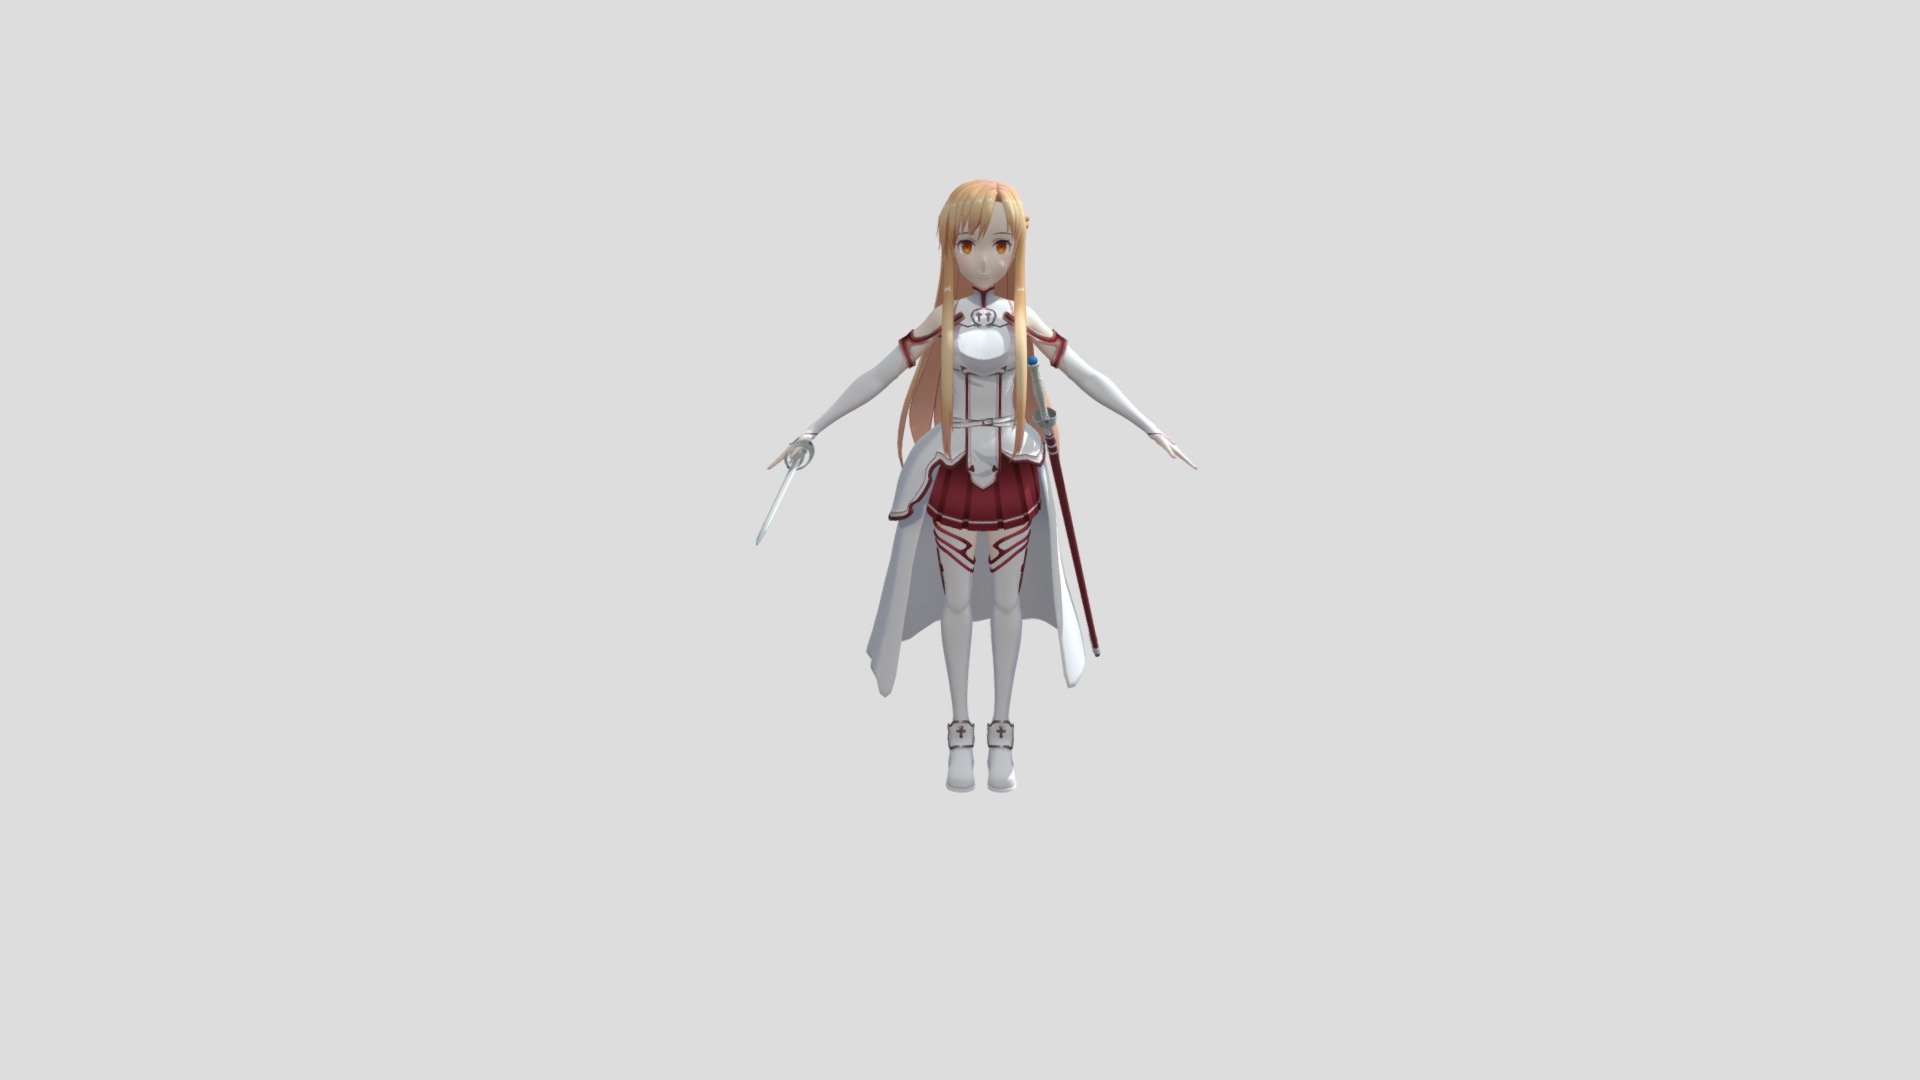 VRChat Avatar  Asuna ,Sword Art Online 
including blendshape and five expressions - VRCaht Avatar Asuna - 3D model by ASA (@billroct) 3d model